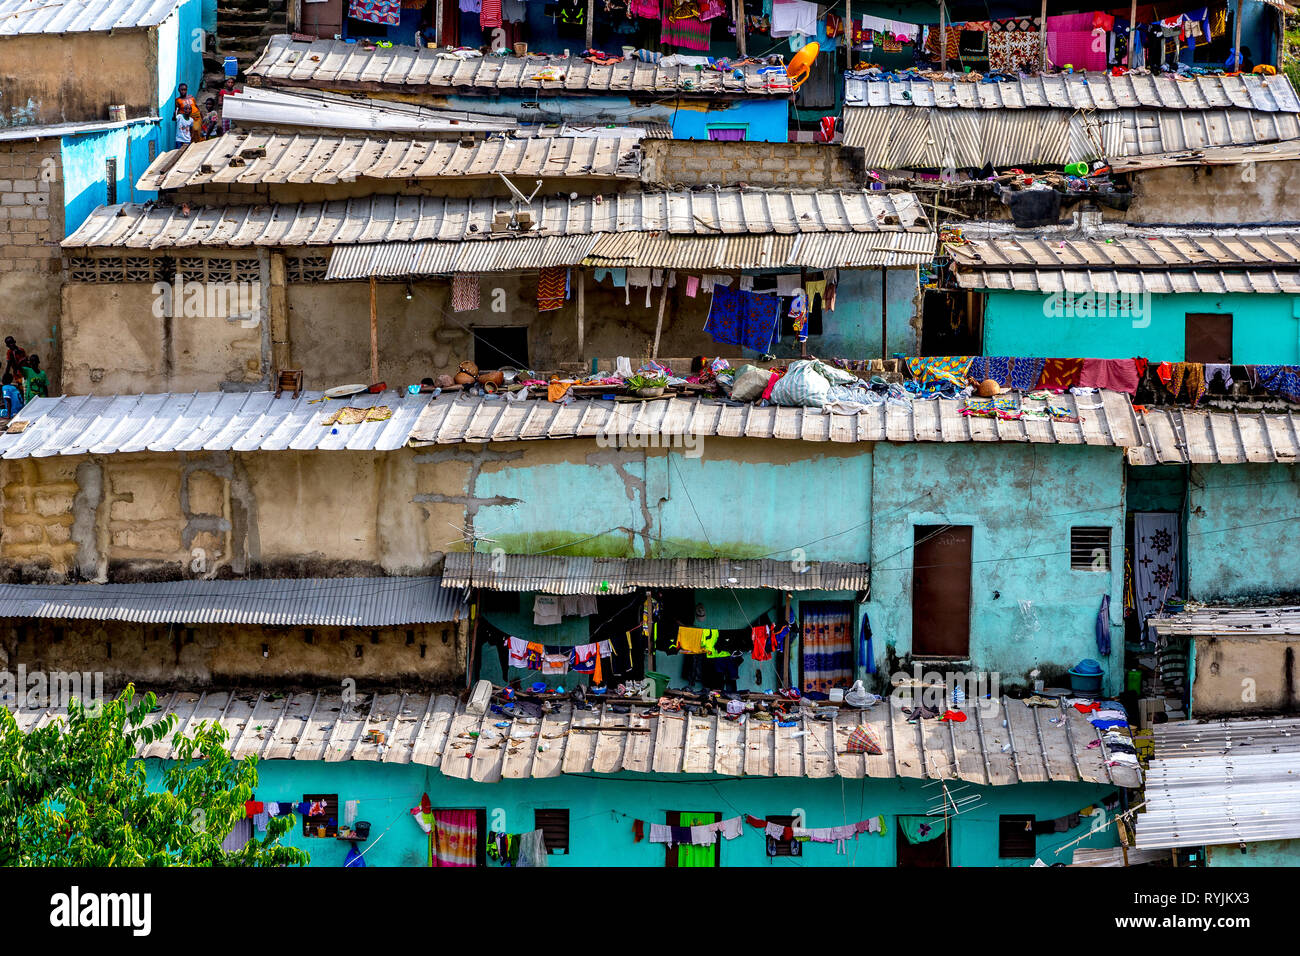 Slums in Abidjan, Ivory Coast. Stock Photo